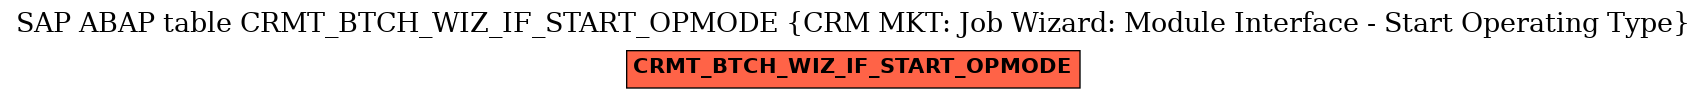 E-R Diagram for table CRMT_BTCH_WIZ_IF_START_OPMODE (CRM MKT: Job Wizard: Module Interface - Start Operating Type)